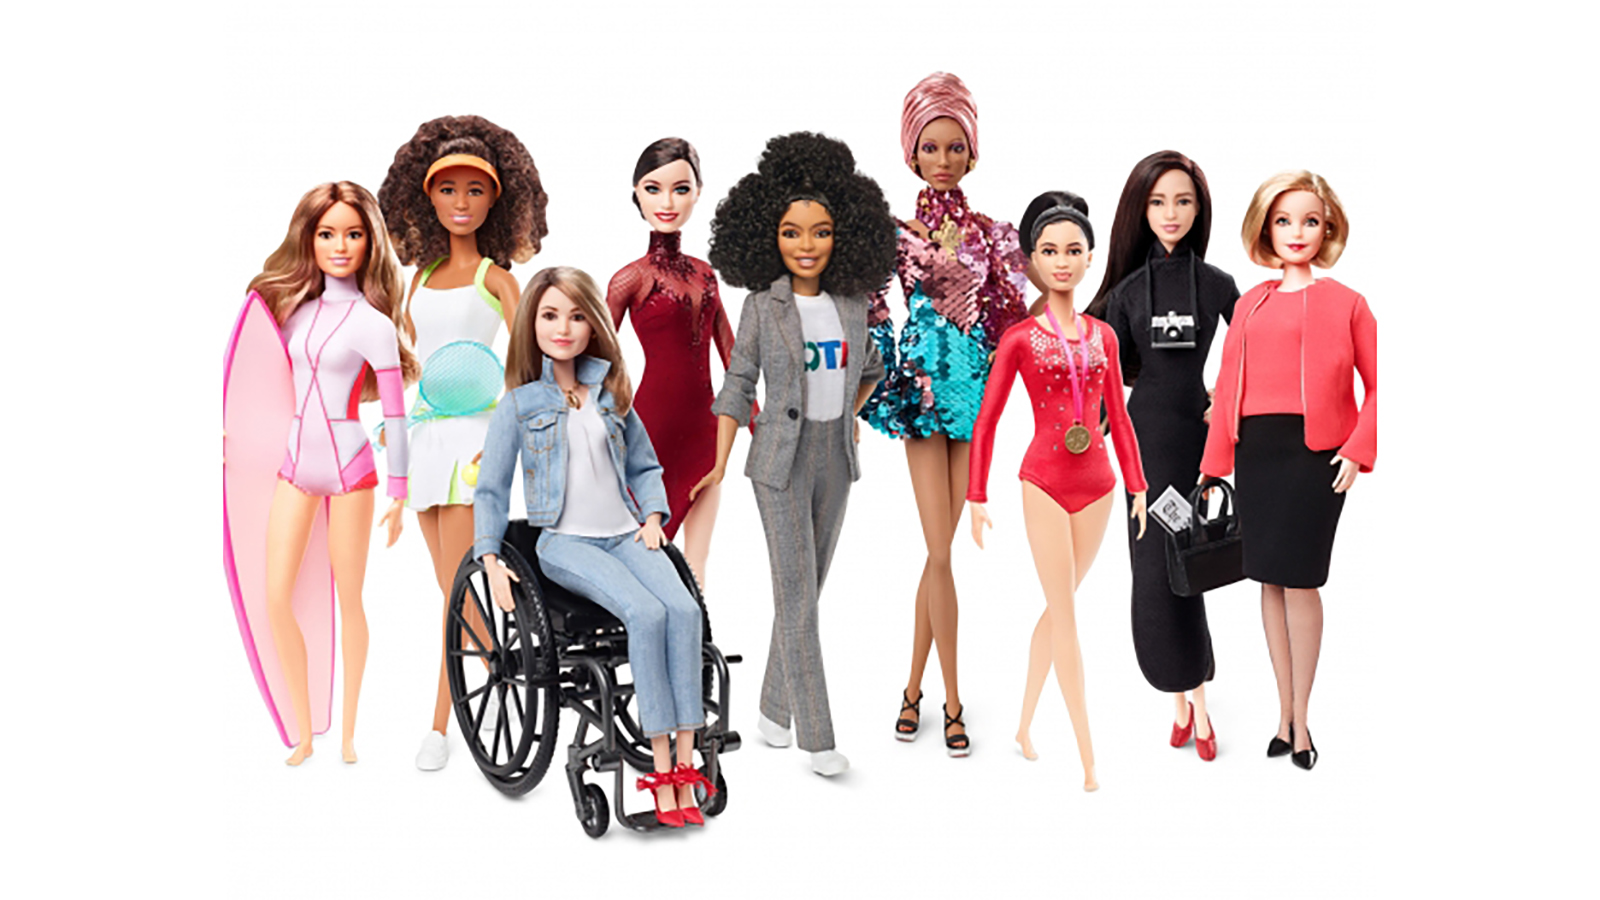 most popular barbie dolls